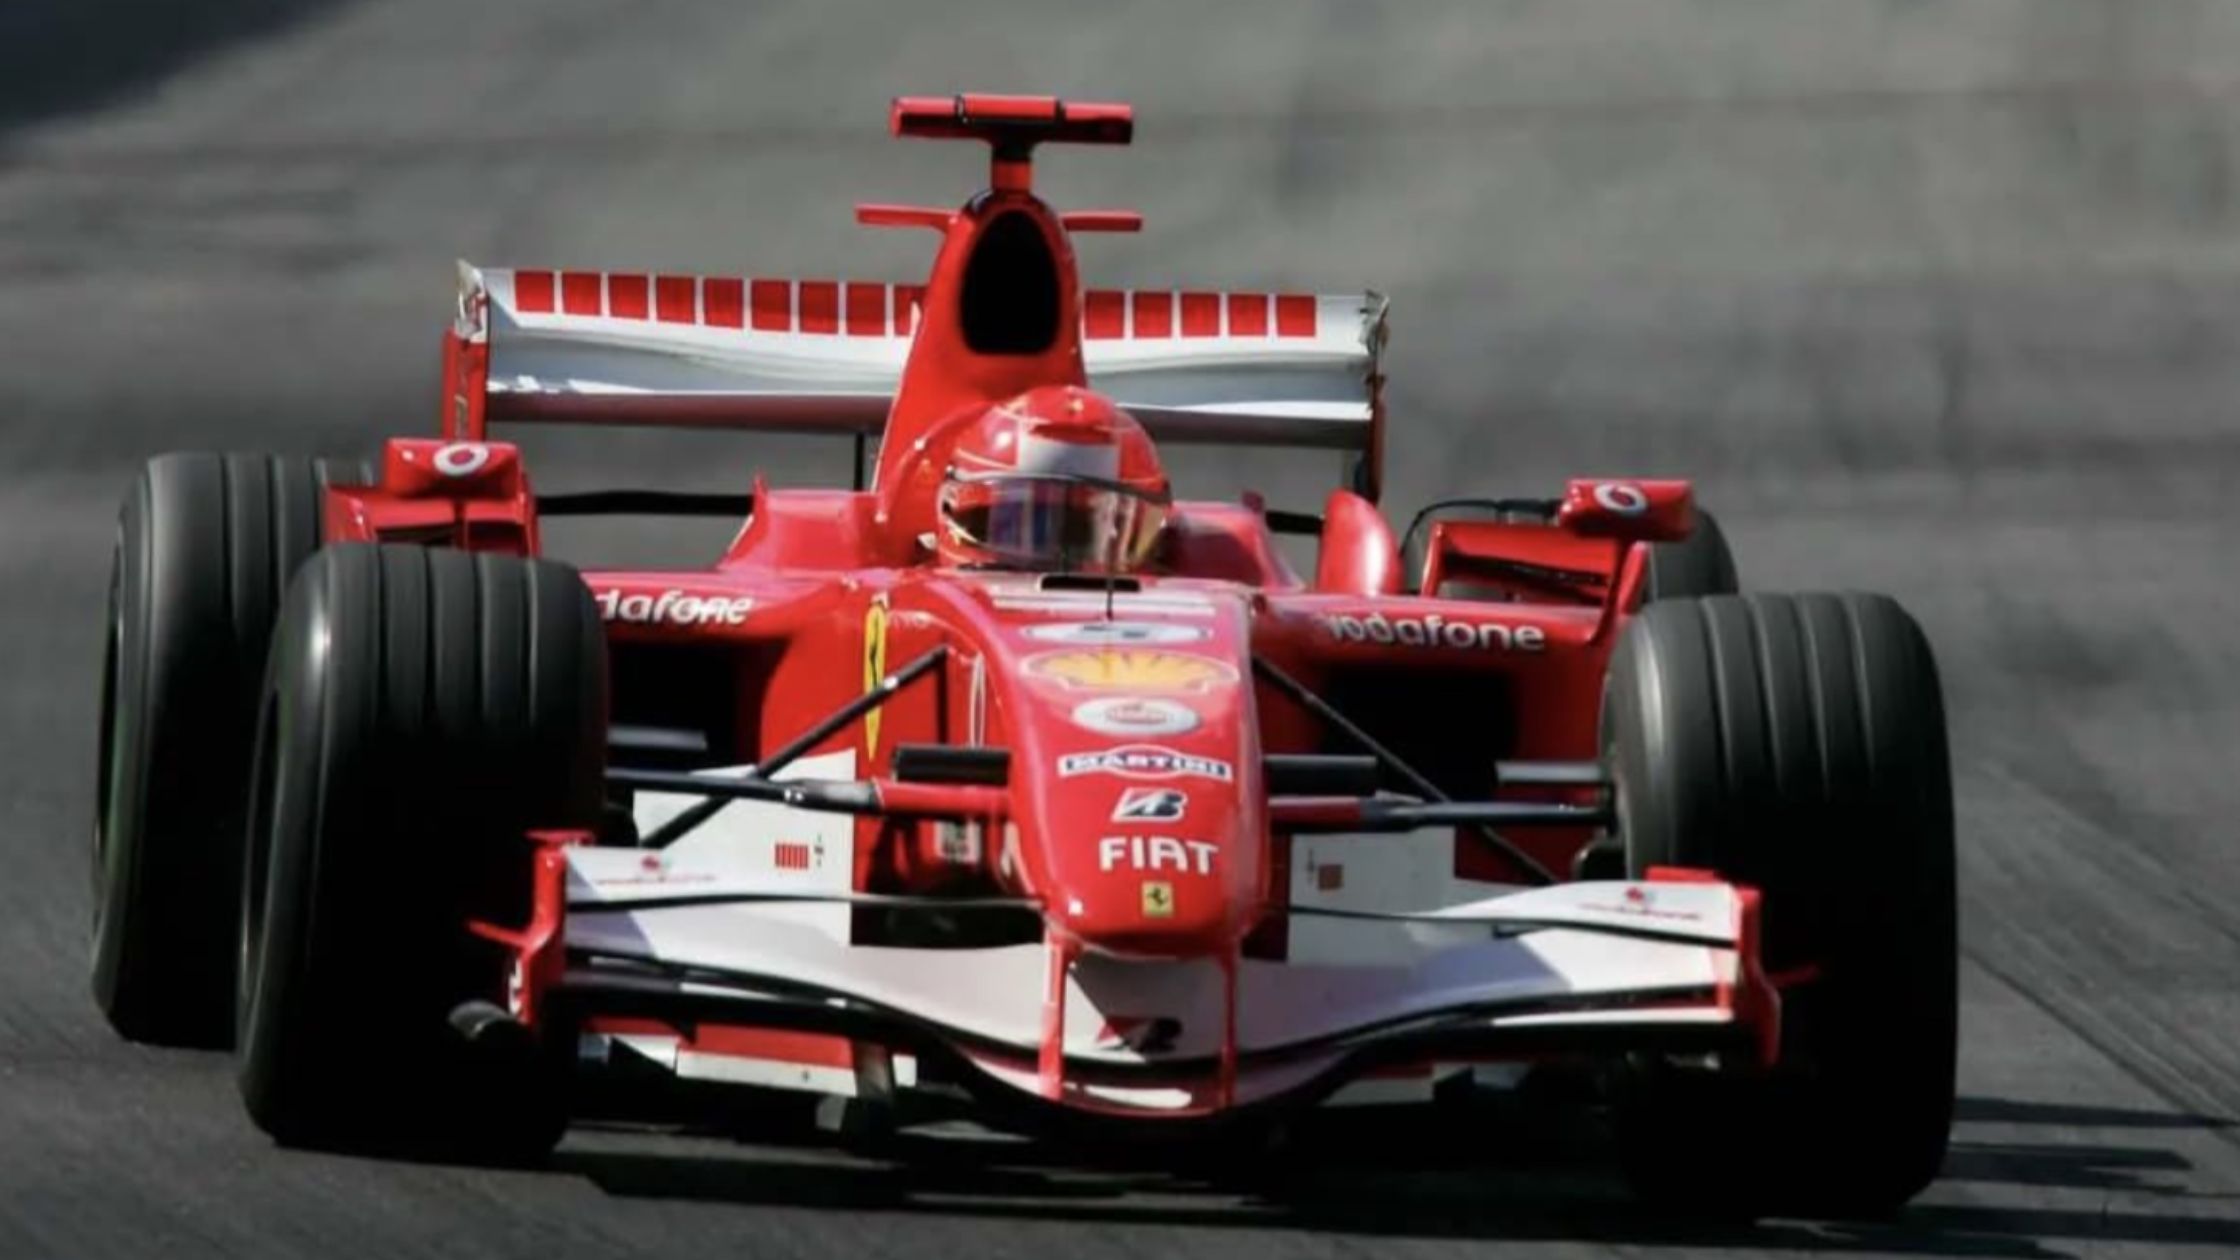 Racing car scene from the film Schumacher.